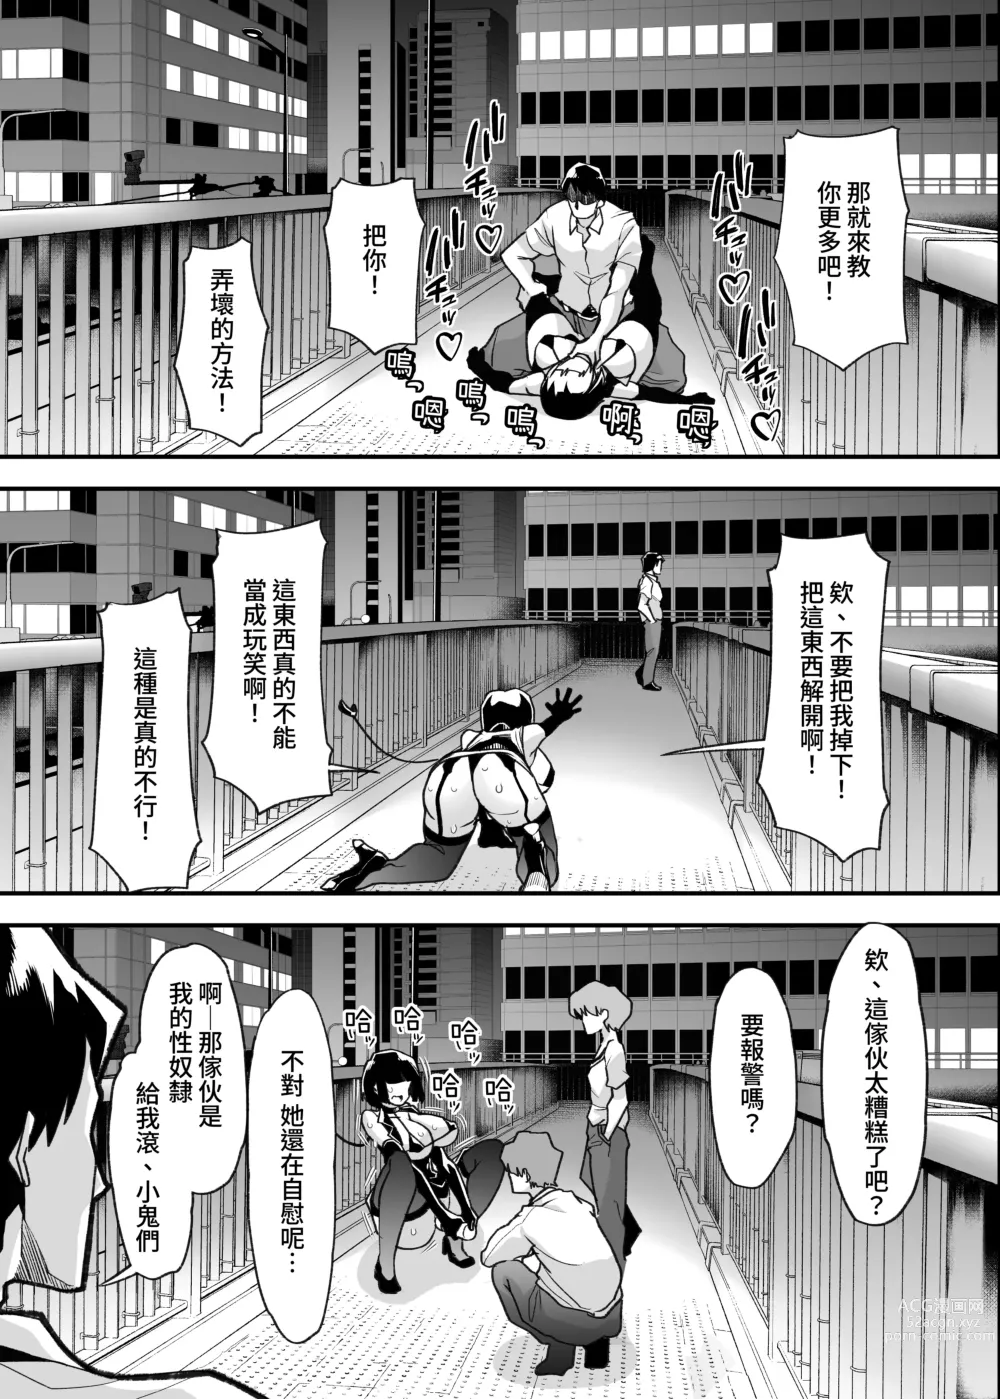 Page 69 of doujinshi 野生受虐癖生態圖鑑